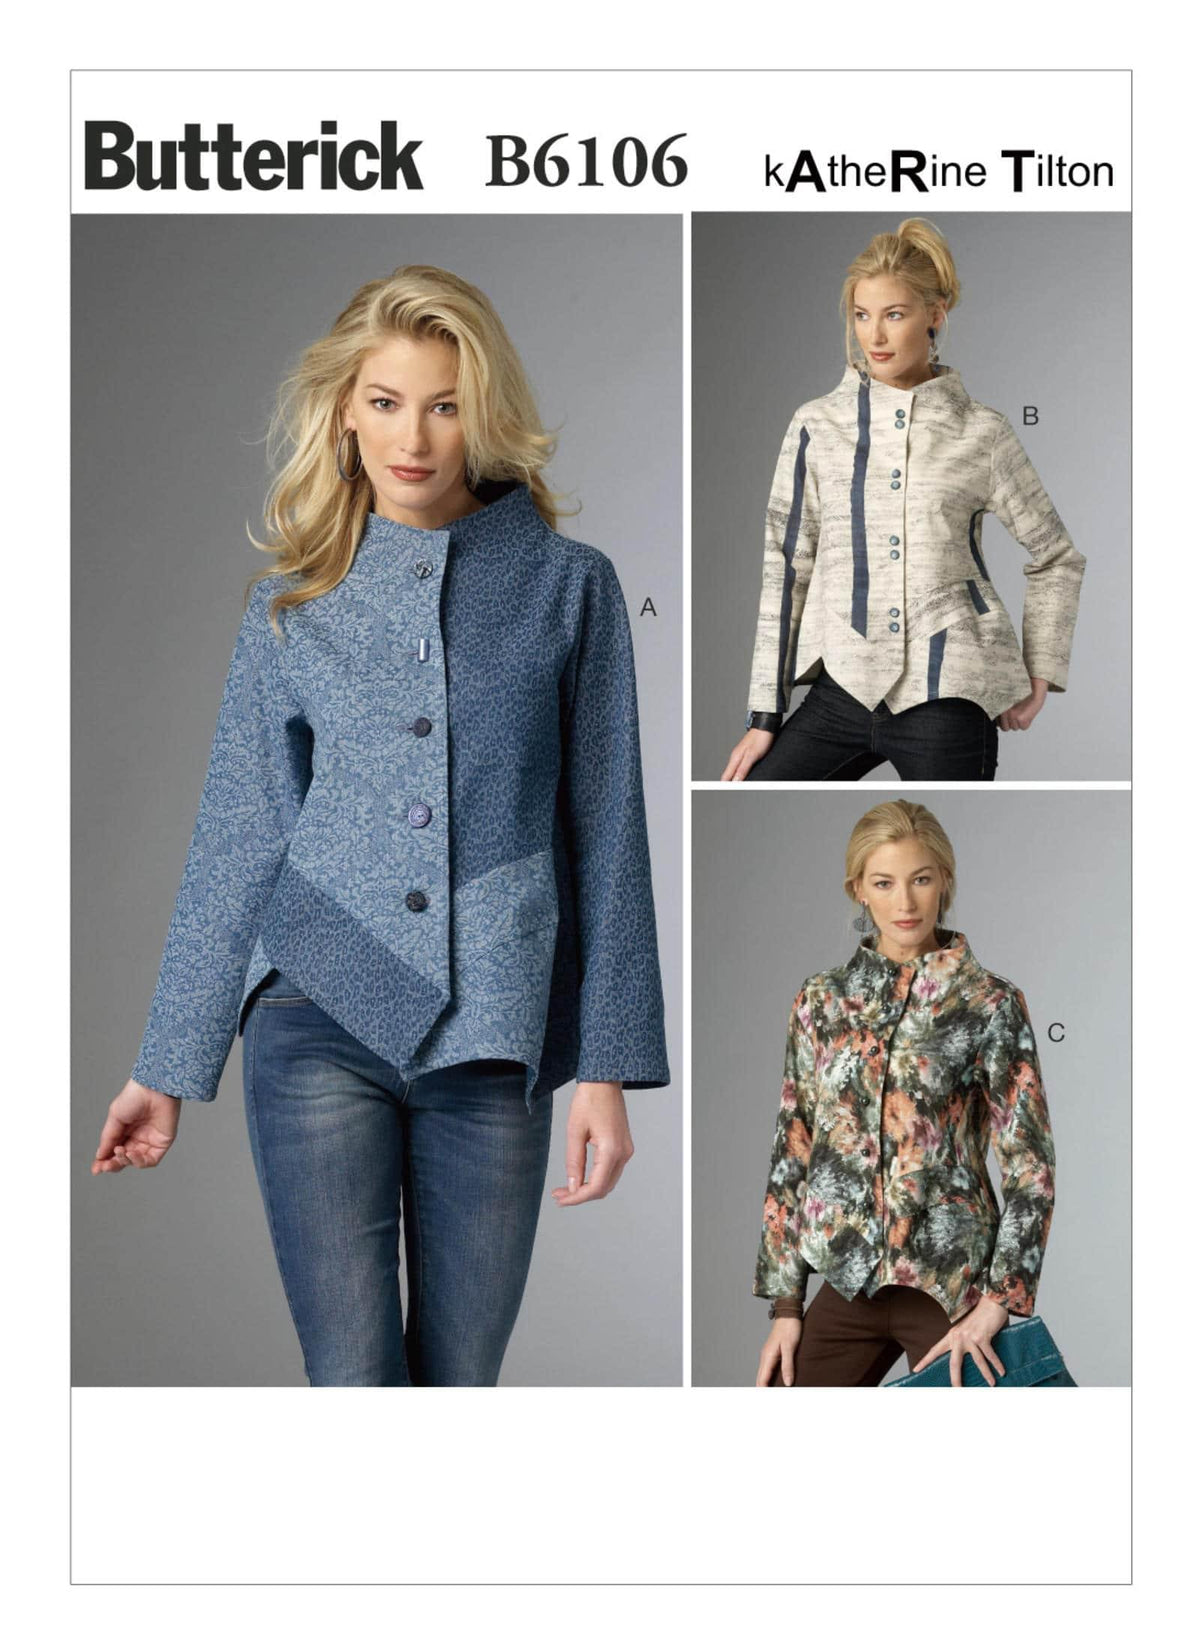 Stillwater Blue Buffalo Checks Cotton Flannel Woven - Marcy Tilton Fabrics